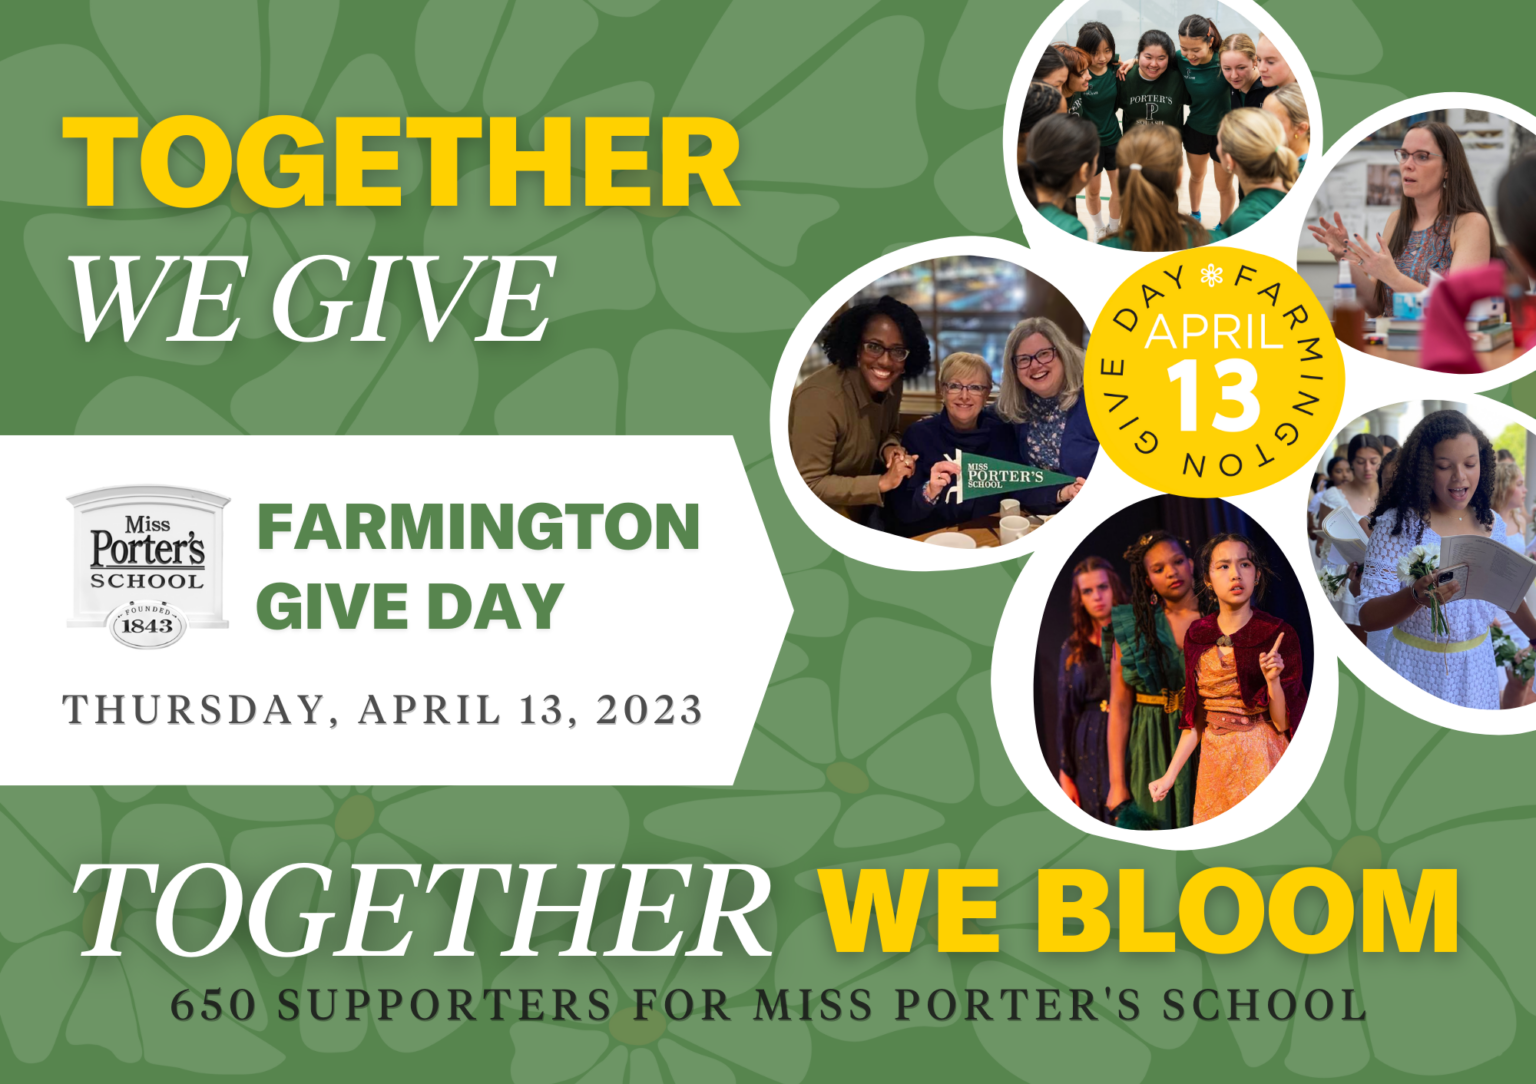 farmington-give-day-2023-miss-porter-s-school